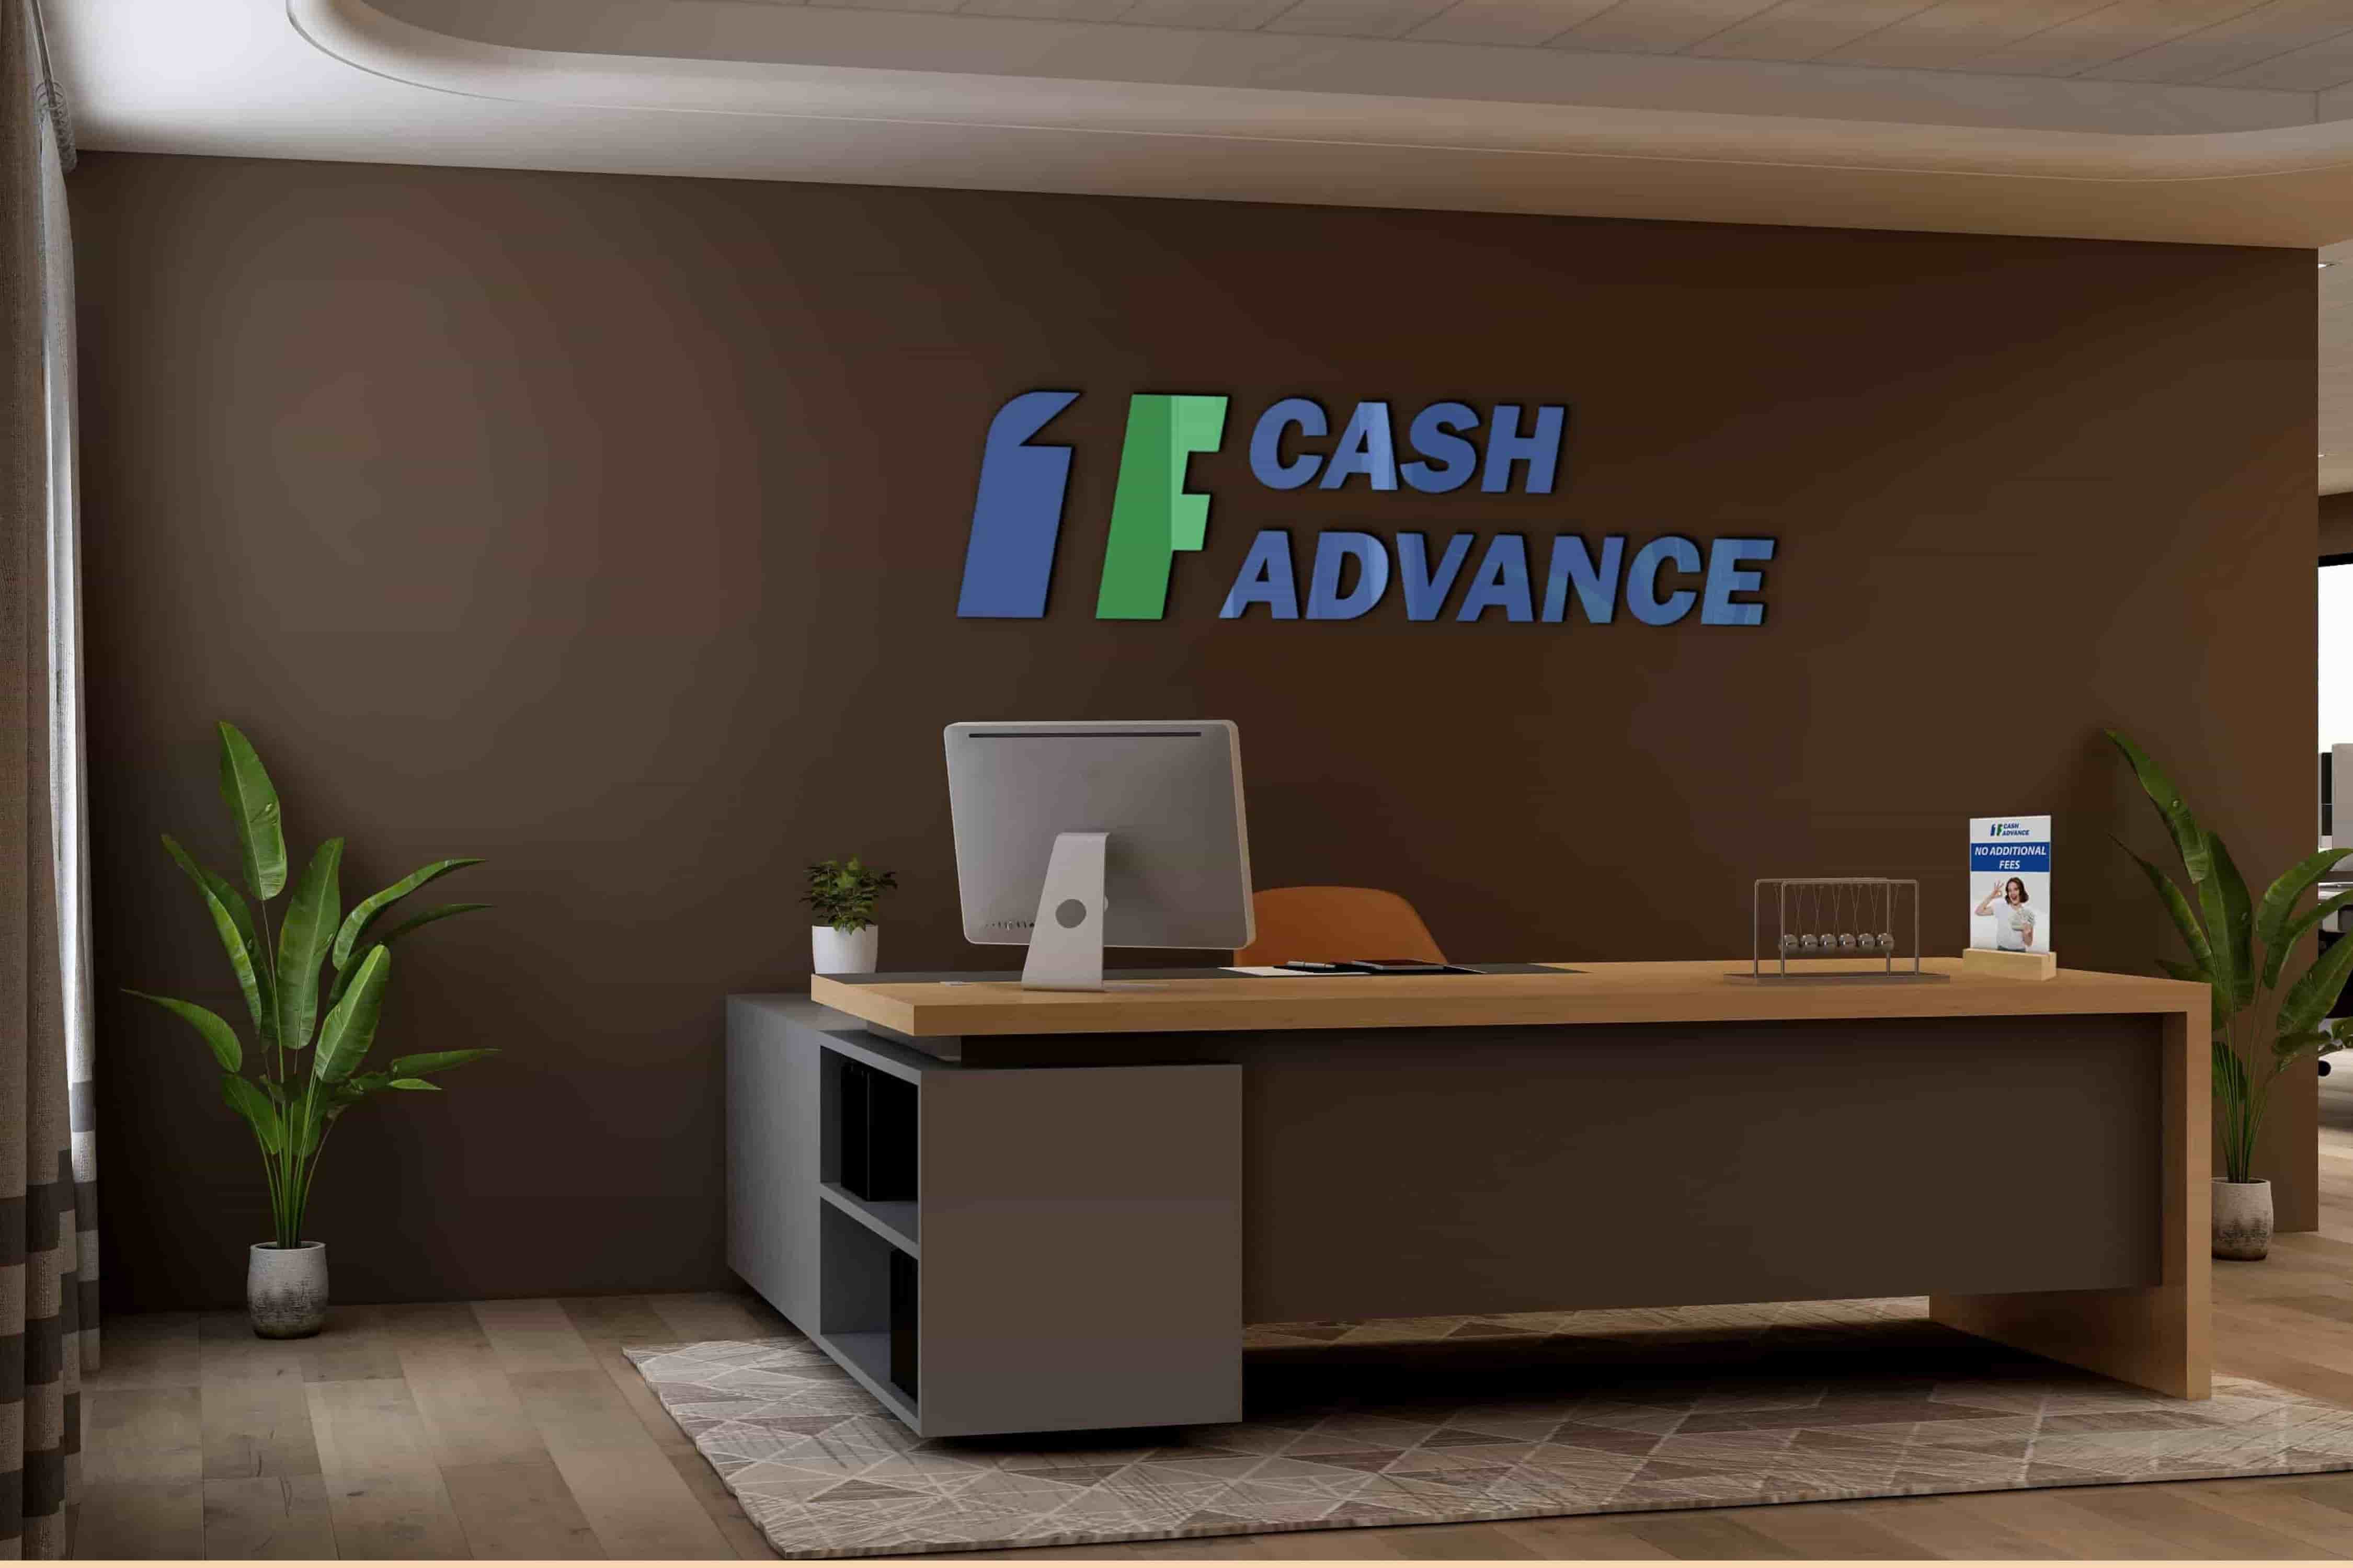 1F Cash Advance payday loans Reston, VA